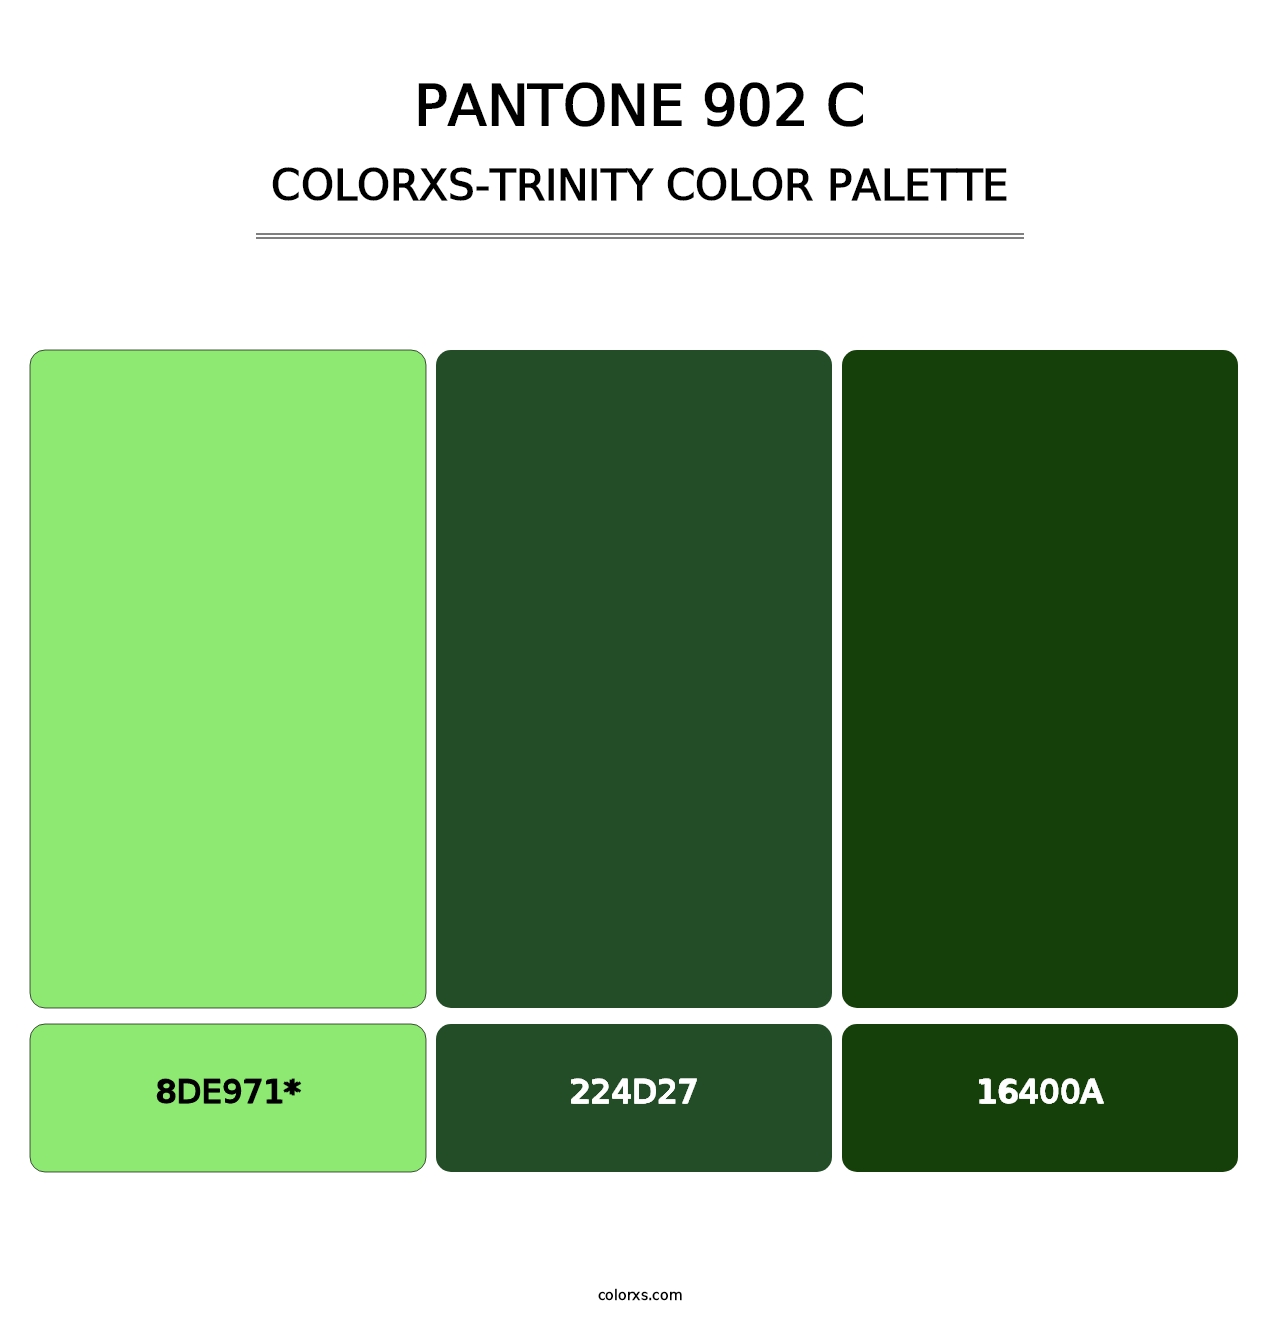 PANTONE 902 C - Colorxs Trinity Palette